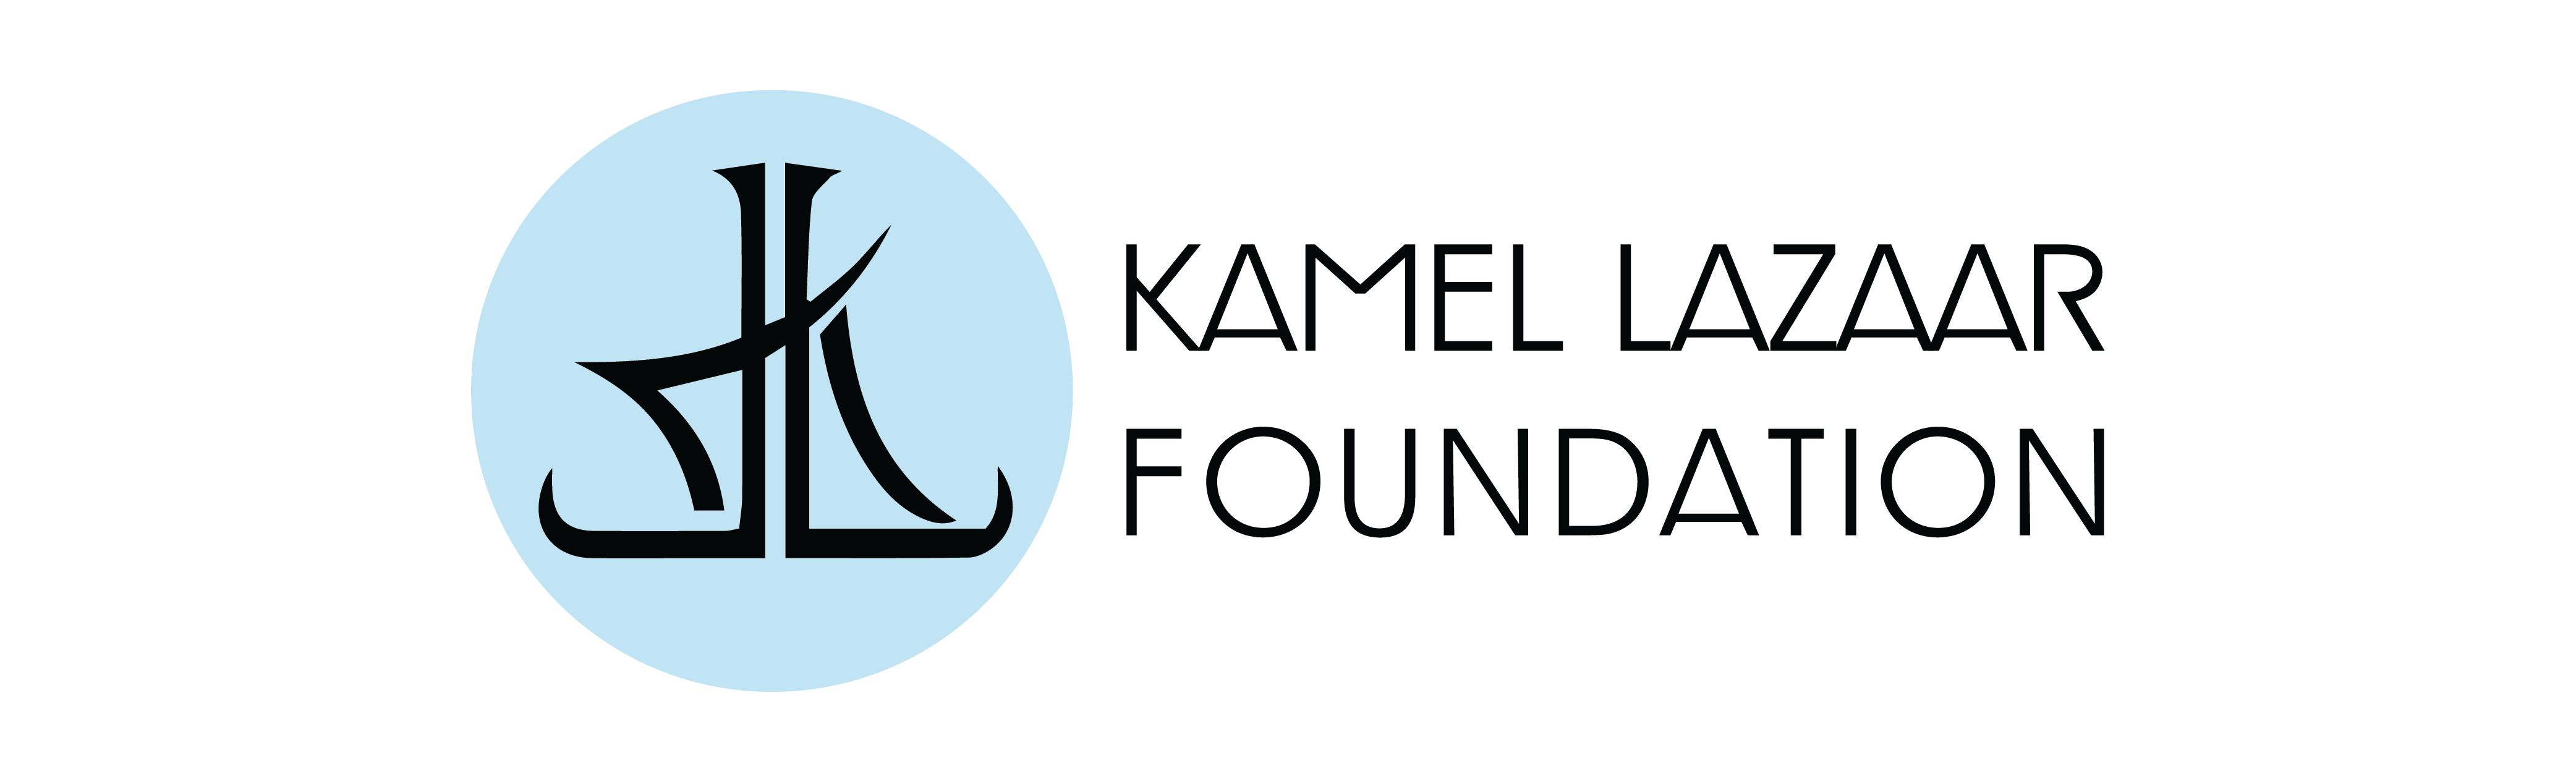 Kamel Lazaar Foundation for Art and Culture